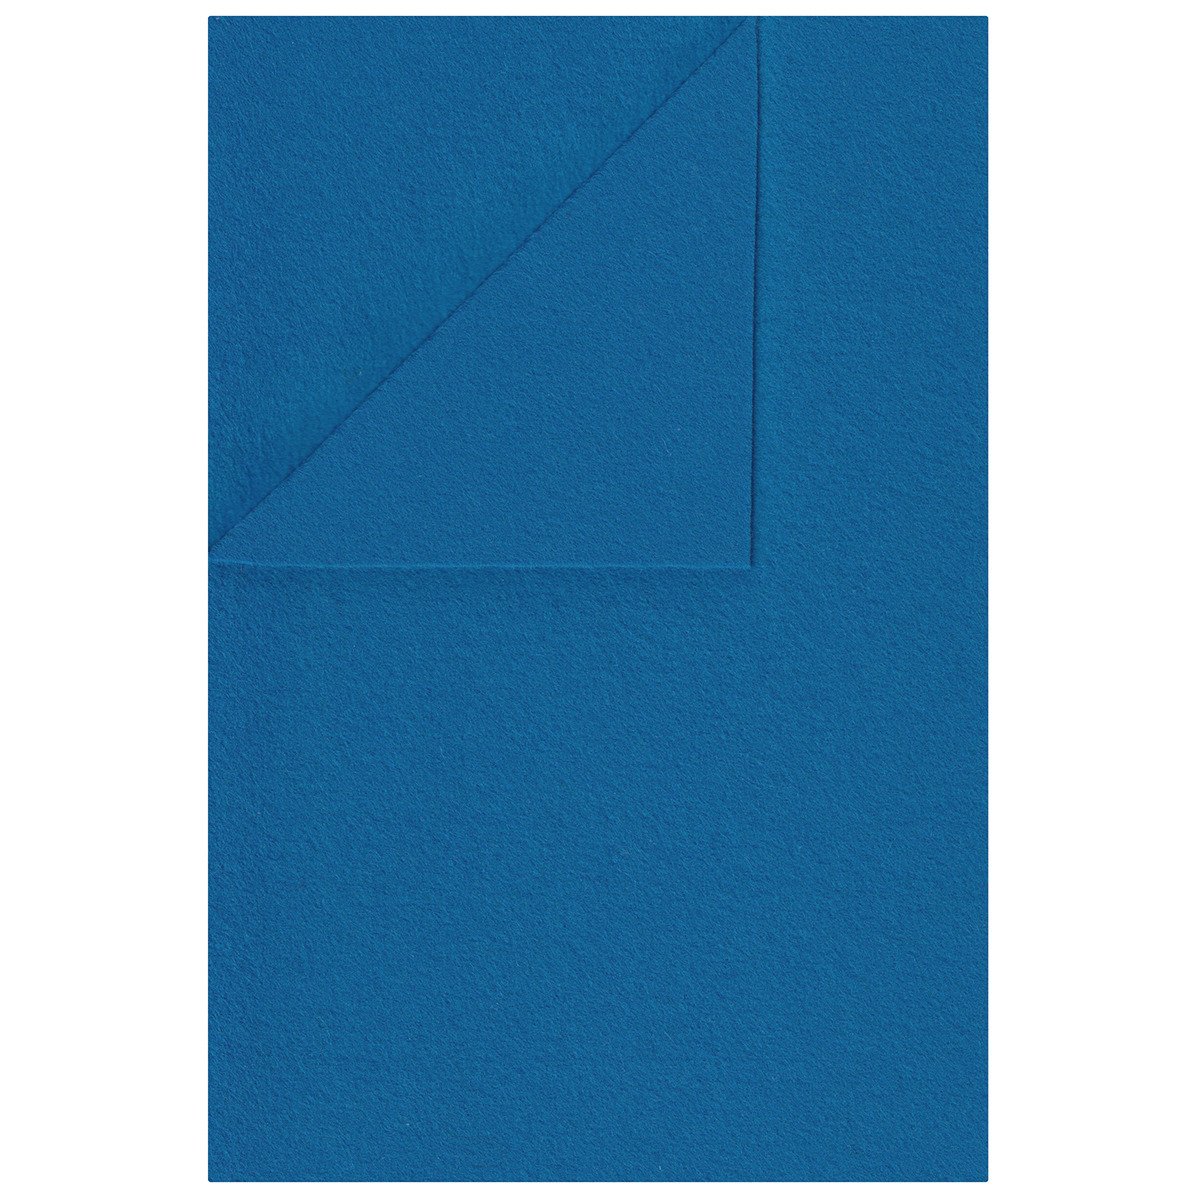 100% Wolle Filz WOLLFILZ Bastelfilz Dekofilz 20x30cm/1,5 mm/450g, 5677 blau